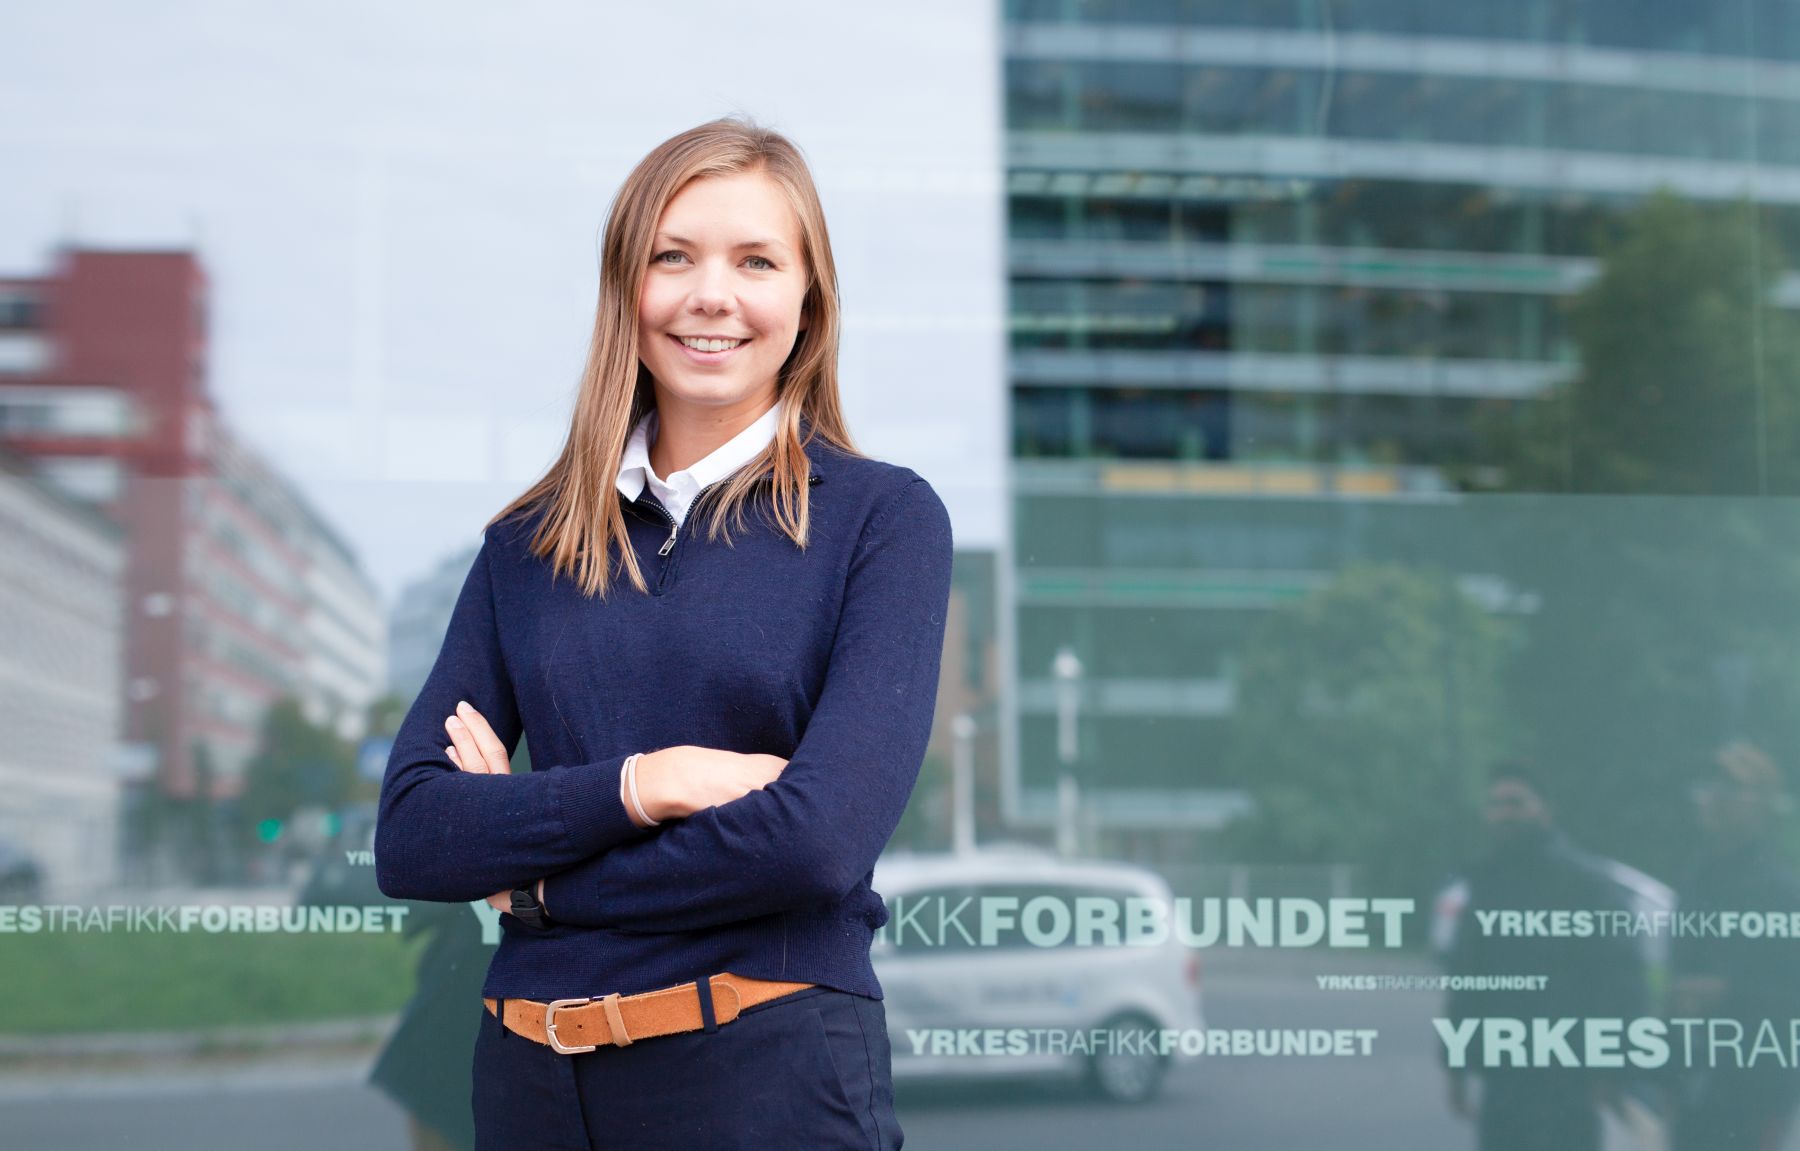 FOTO: Advokat i Yrkestrafikkforbundet Josefine Wærstad. Foto: Kåre Sponberg